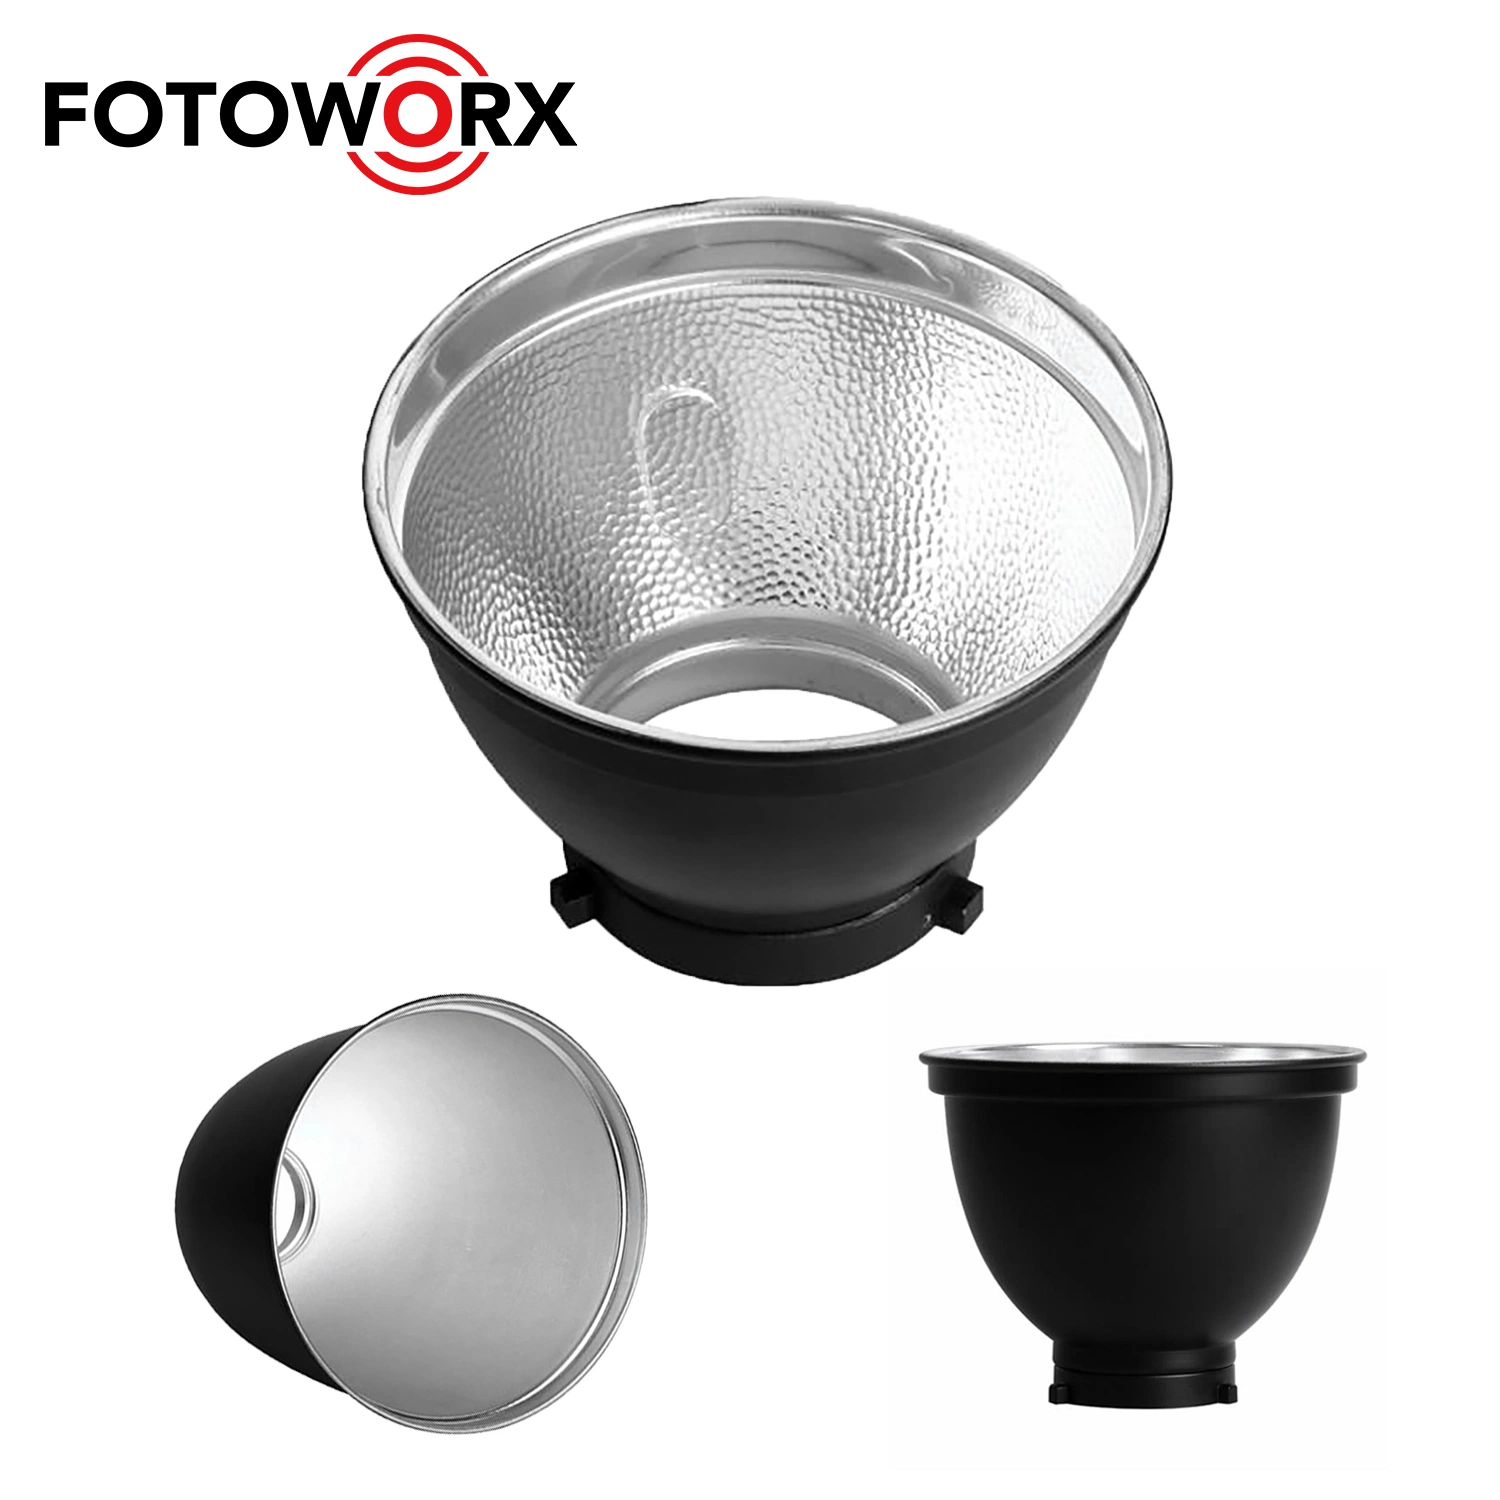 Reflector Lampshade Dish Diffuser for Studio Strobe Flash Light